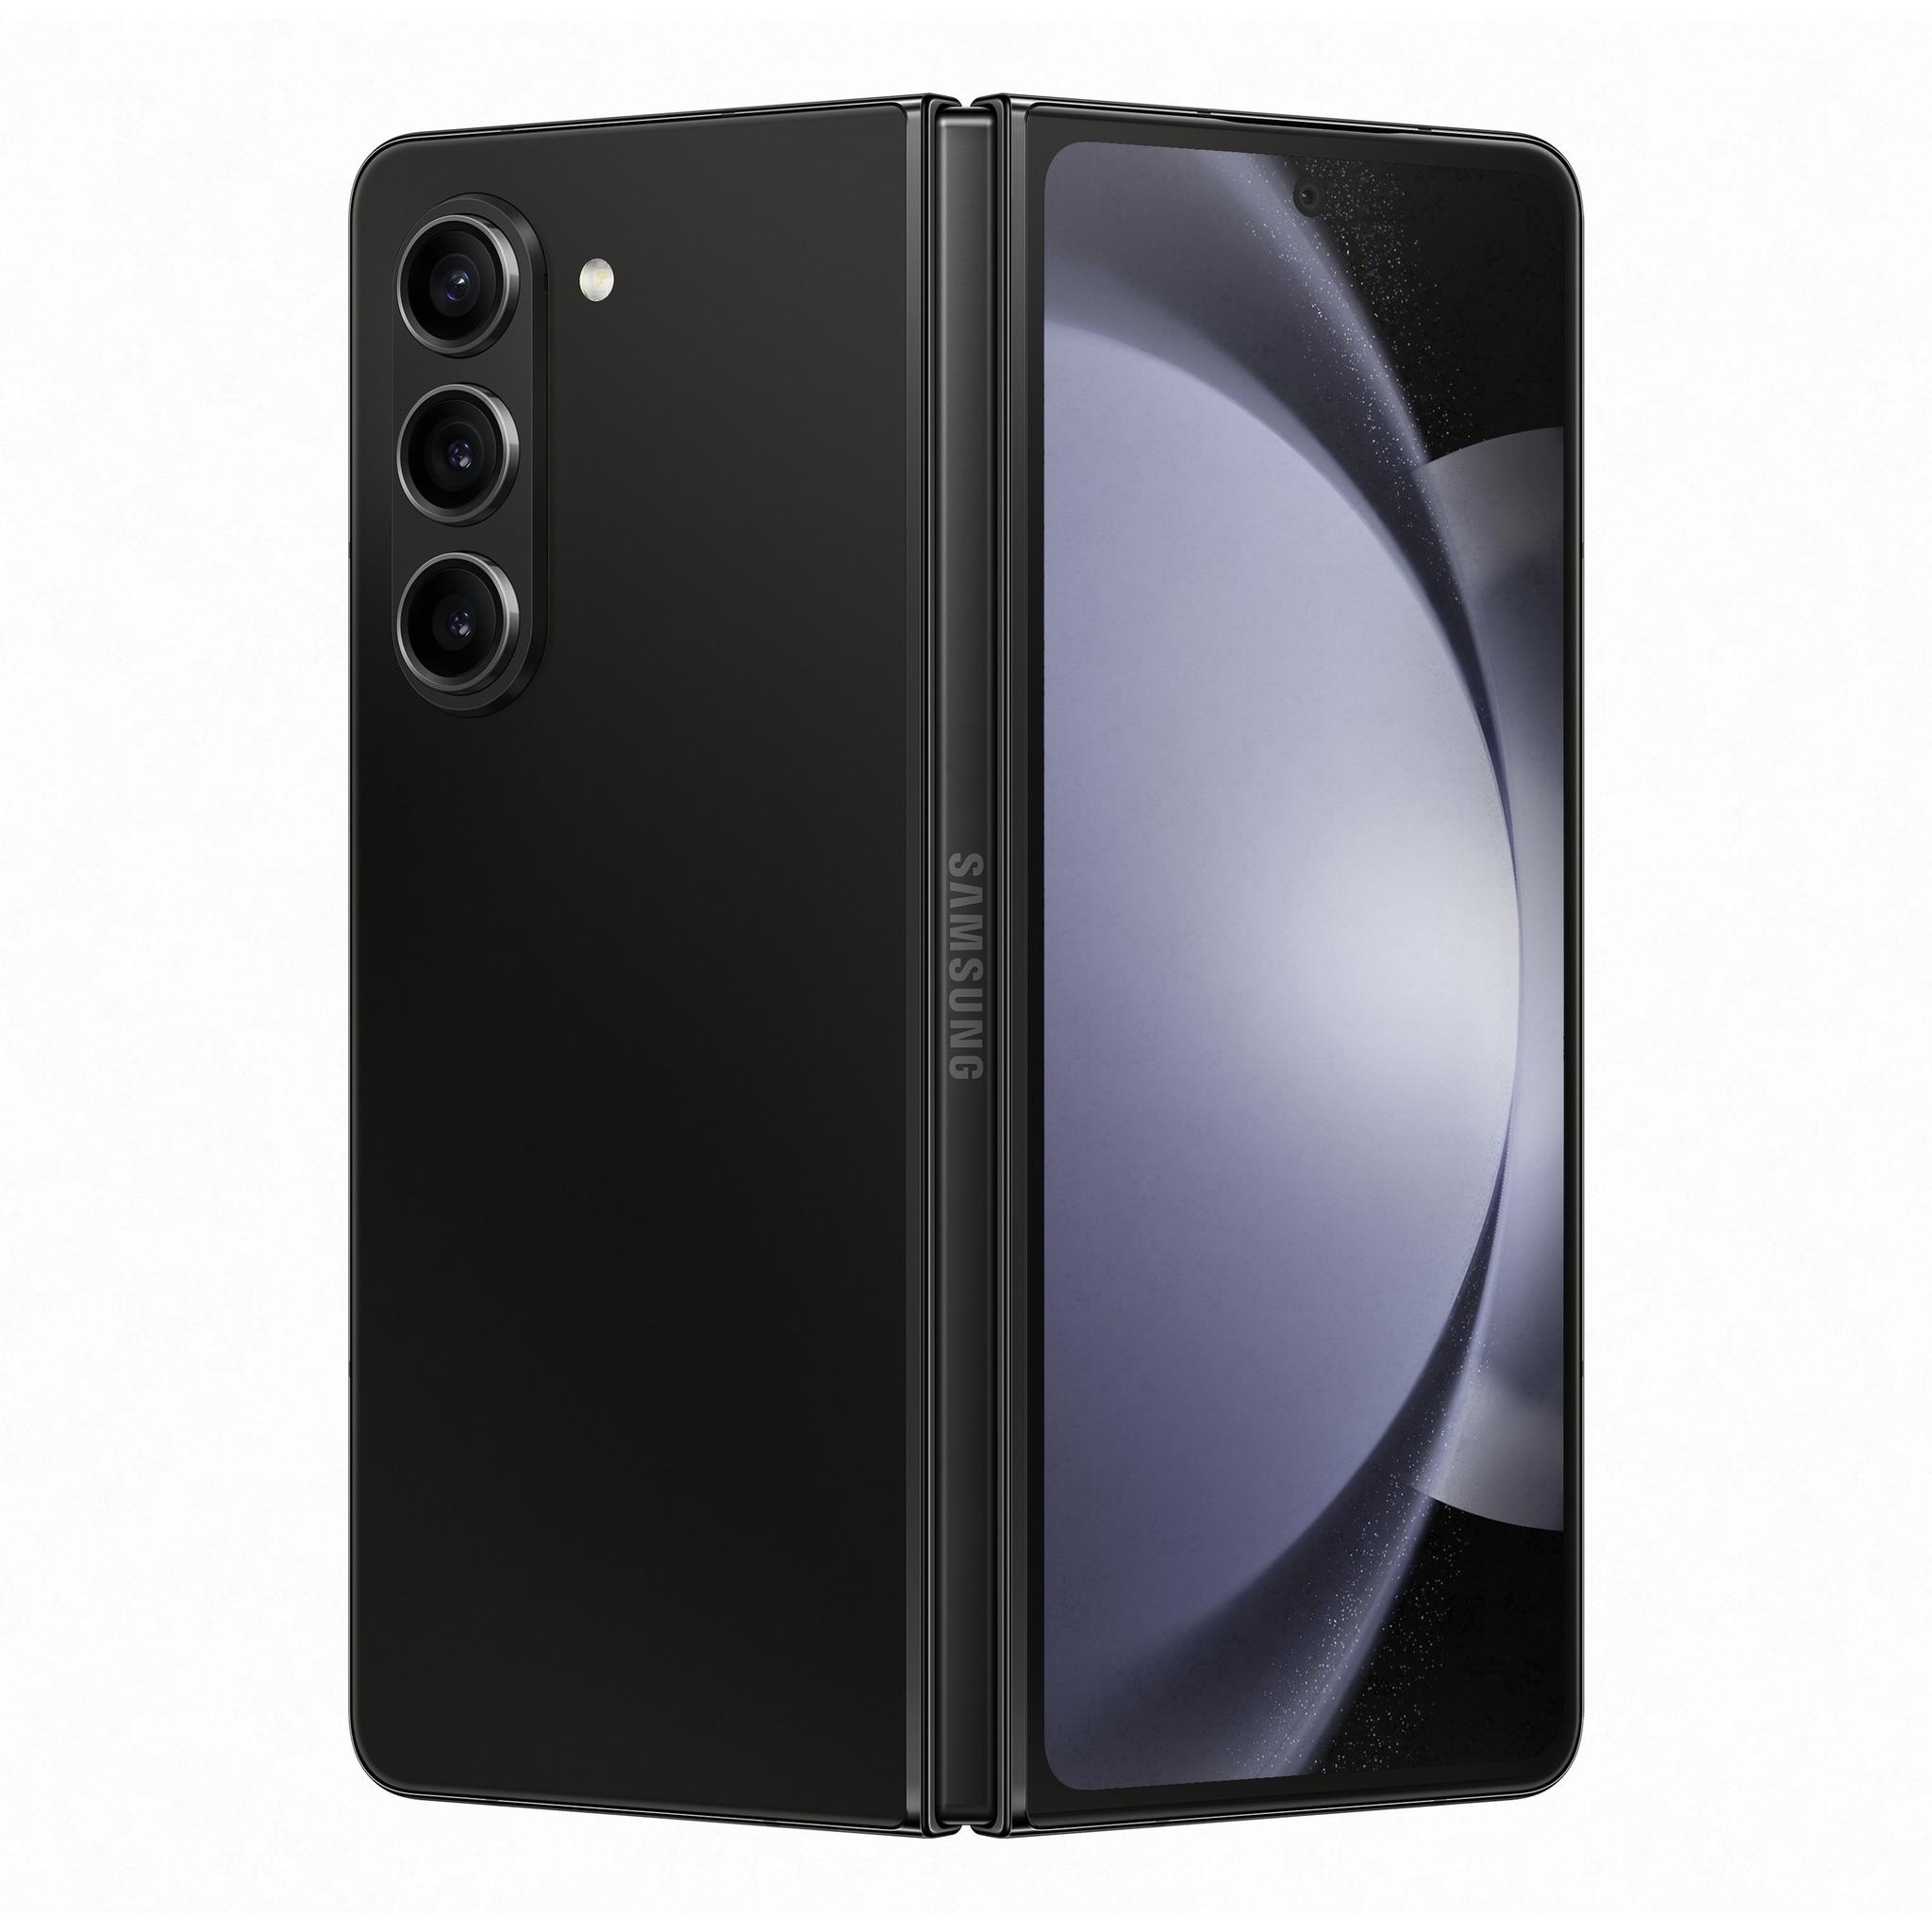 Samsung Galaxy Z Fold5 7.6-inch, 12GB RAM, 512GB, 5G Phone - Phantom Black